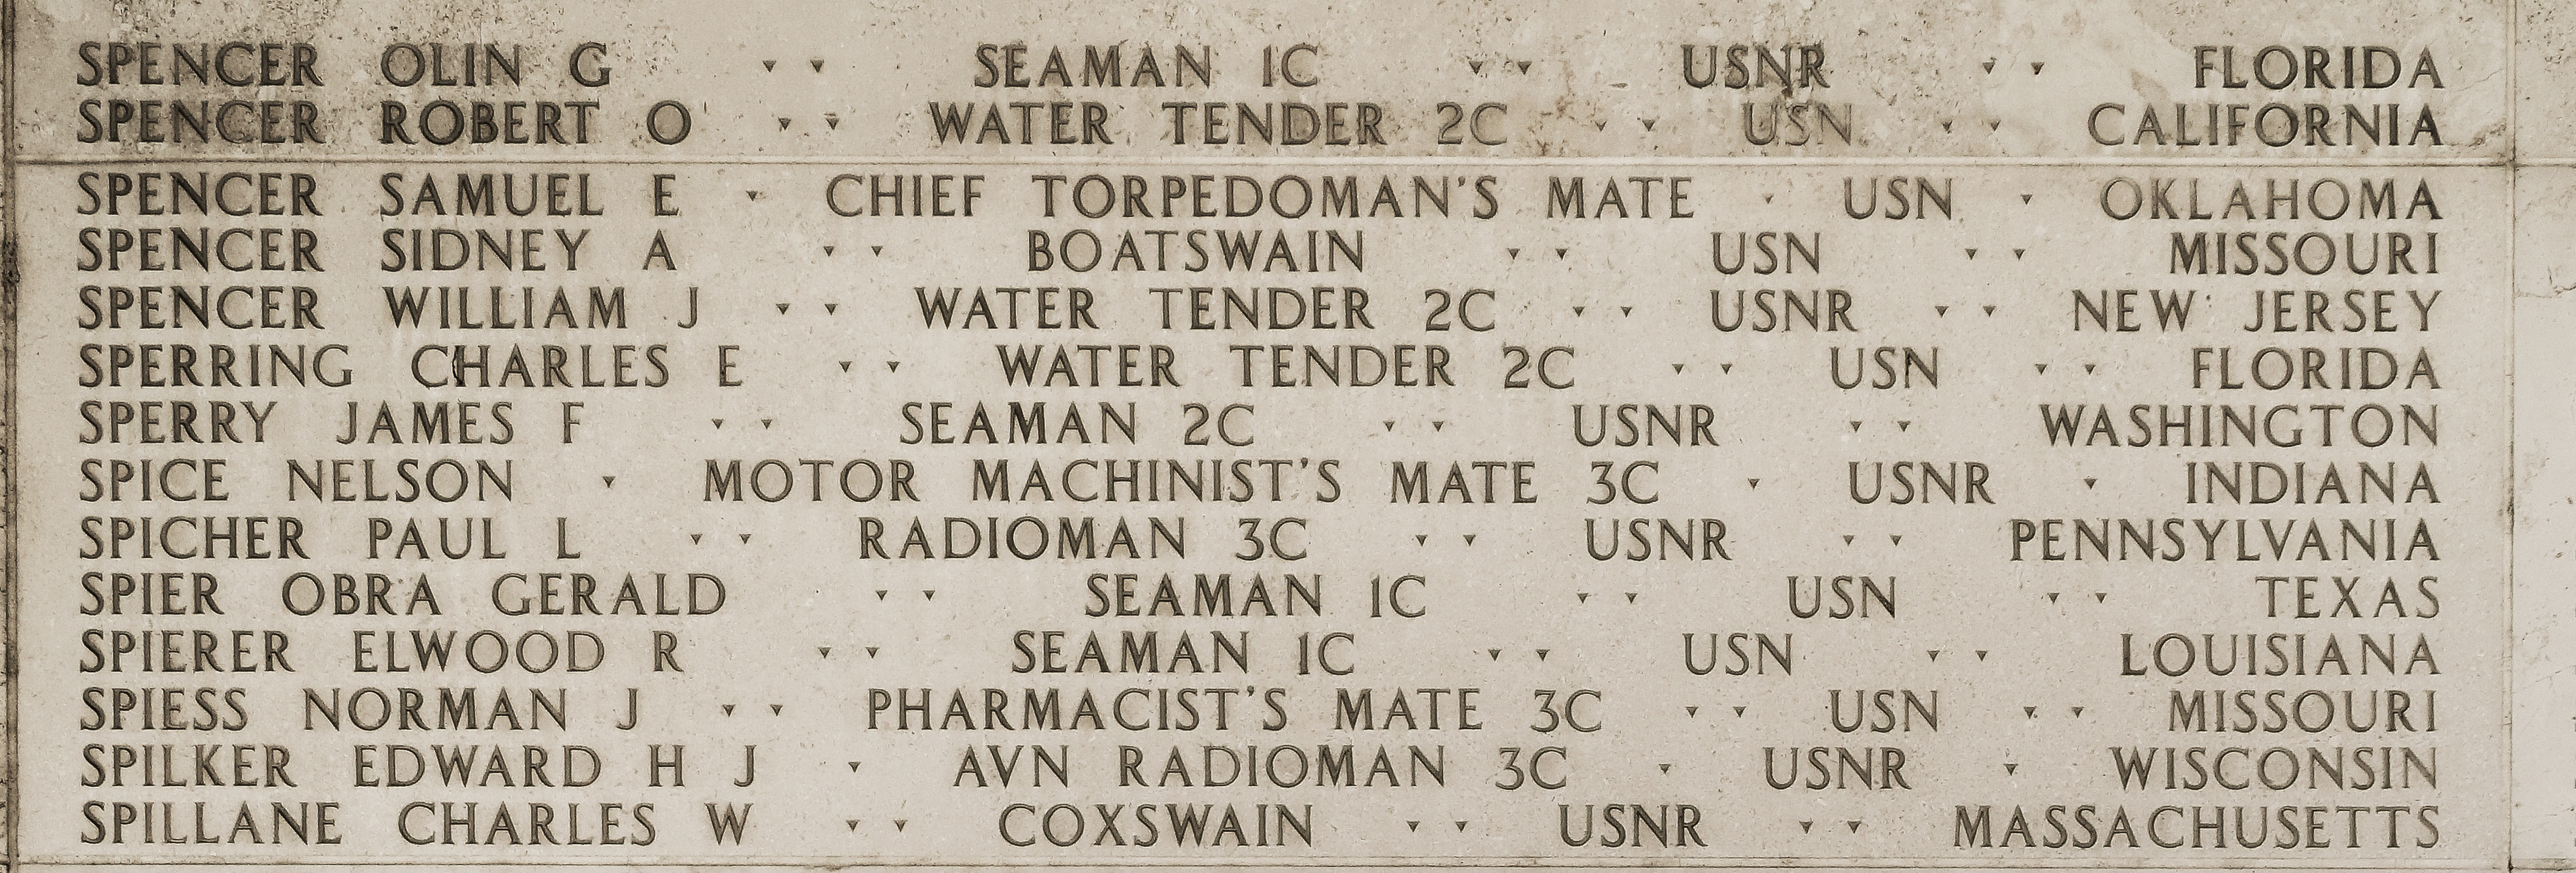 William J. Spencer, Water Tender Second Class